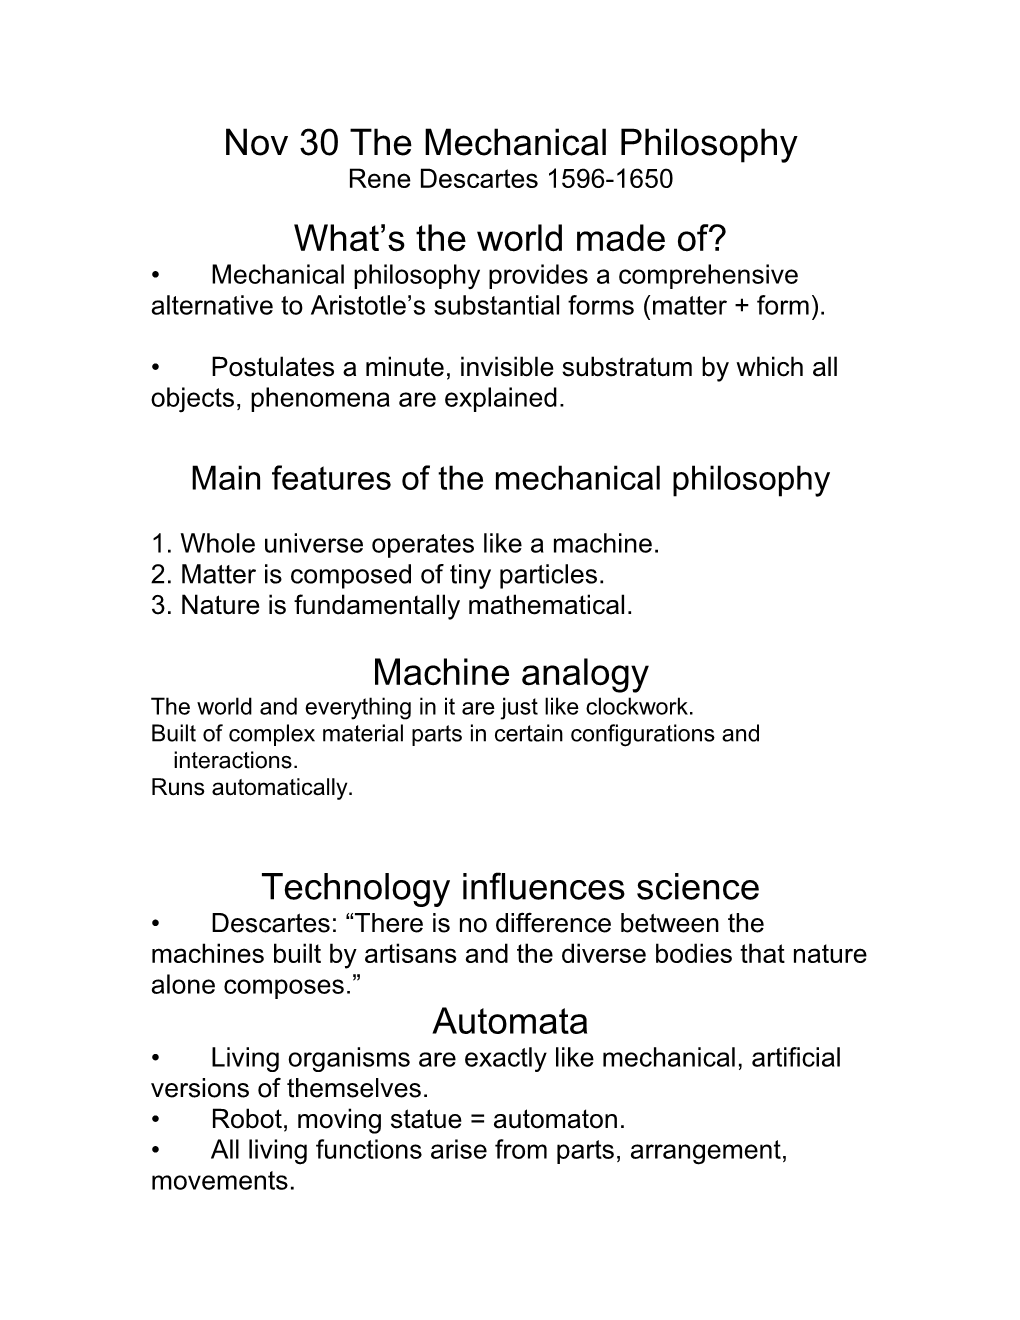 Nov 30 the Mechanical Philosophy